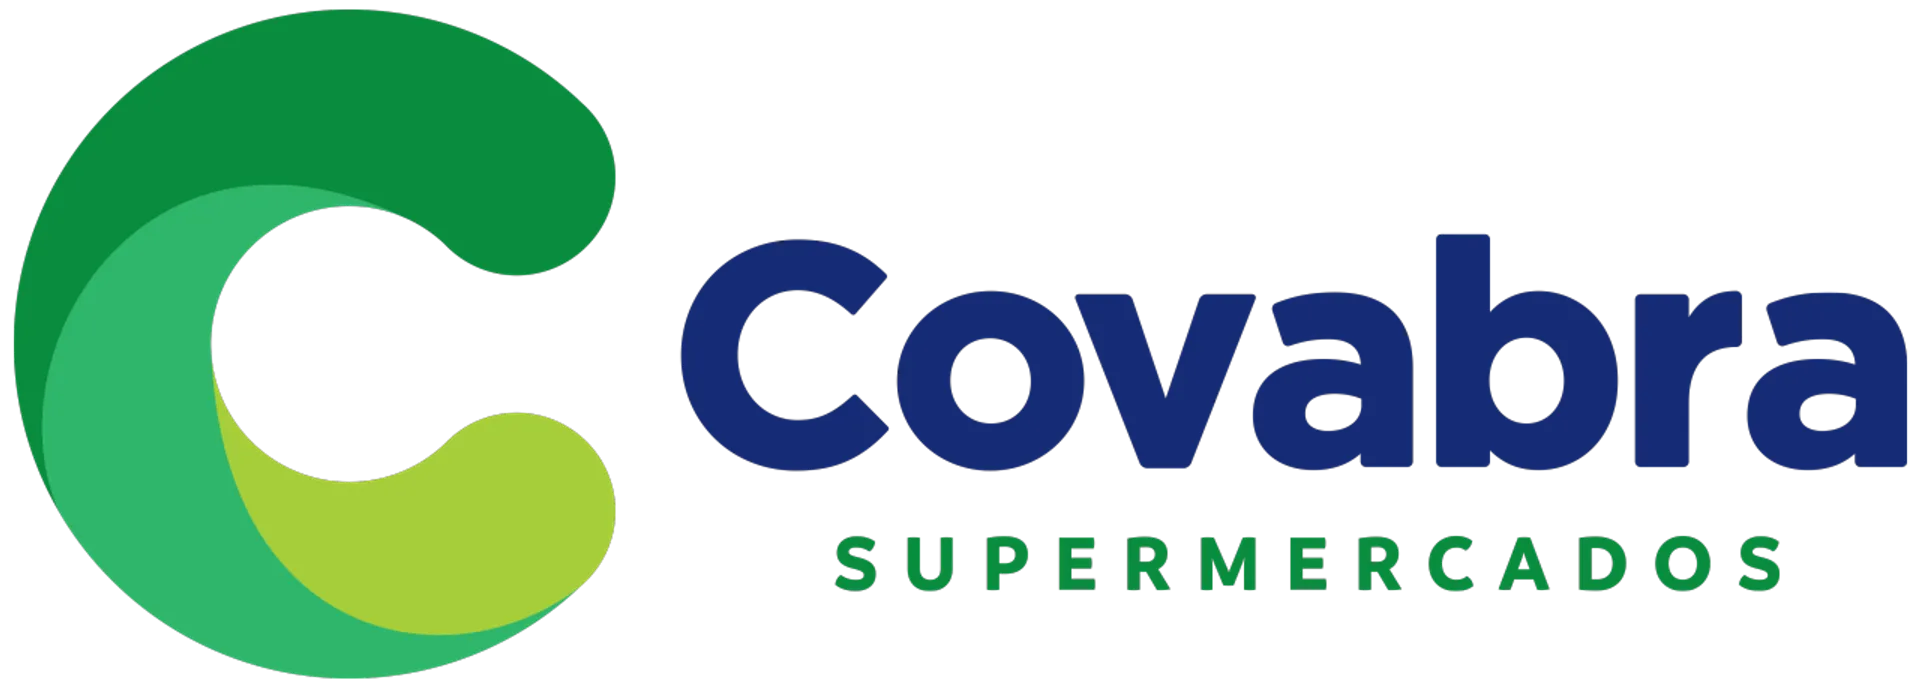 COVABRA SUPERMERCADOS logo